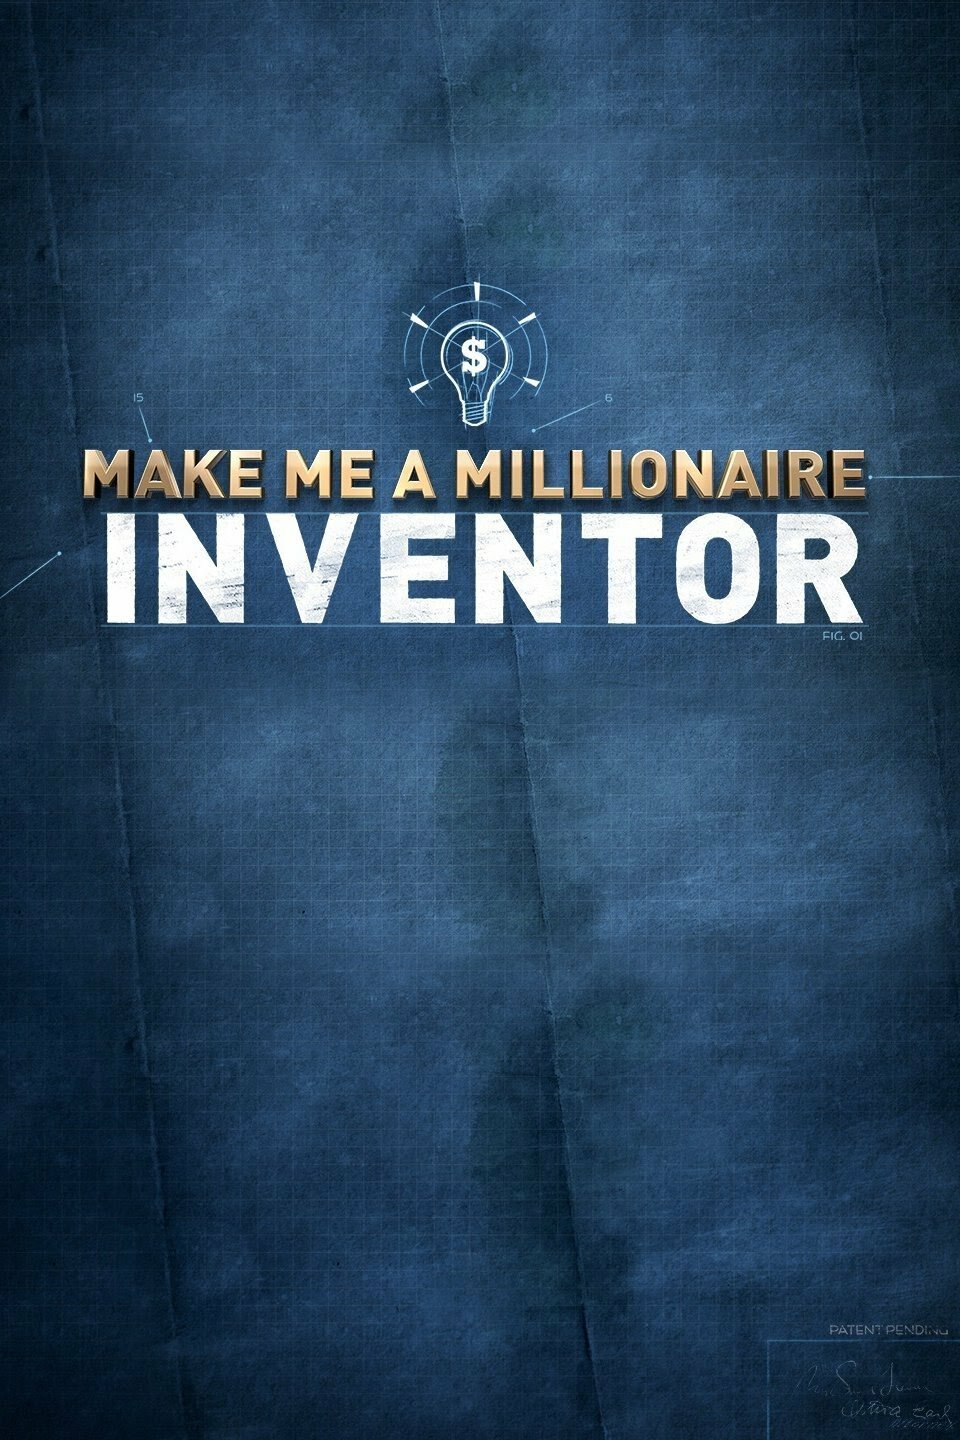 Make Me a Millionaire Inventor